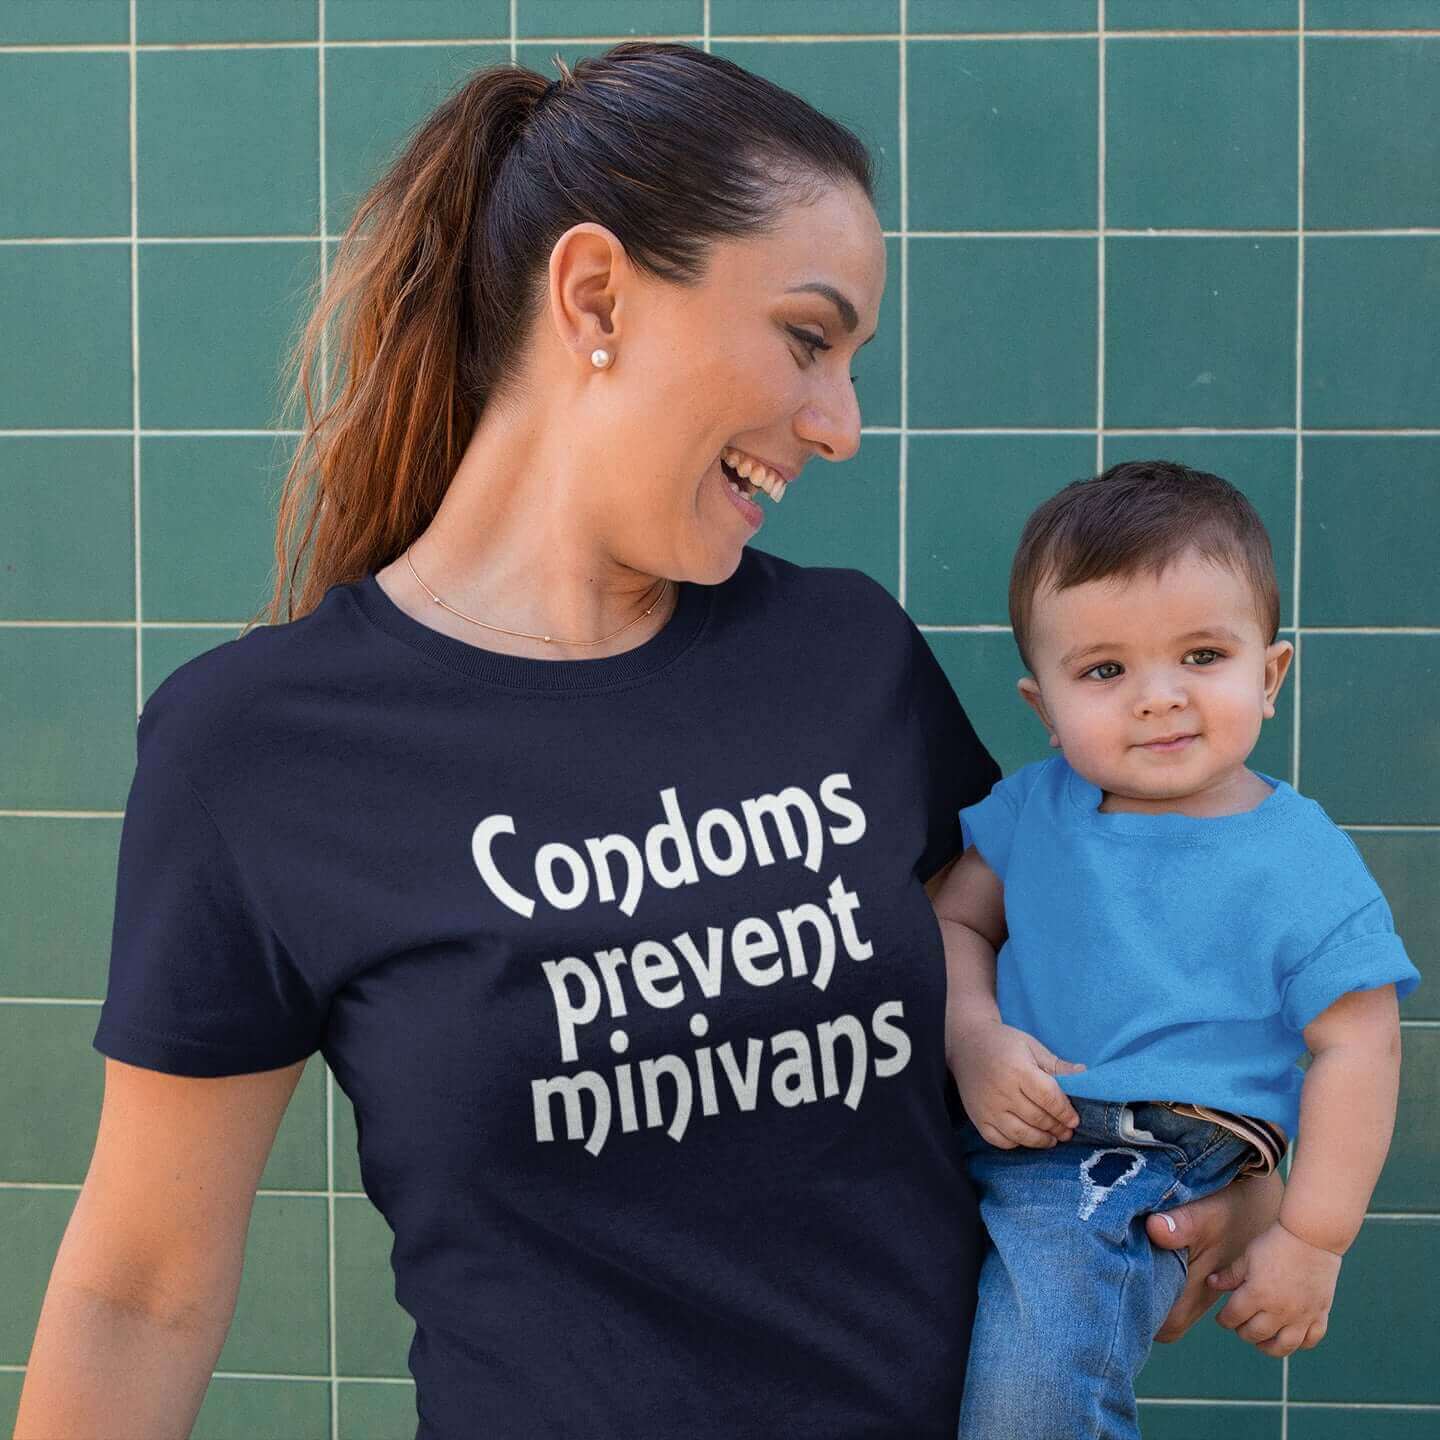 Funny safe sex condoms prevent minivans sarcastic T-shirt